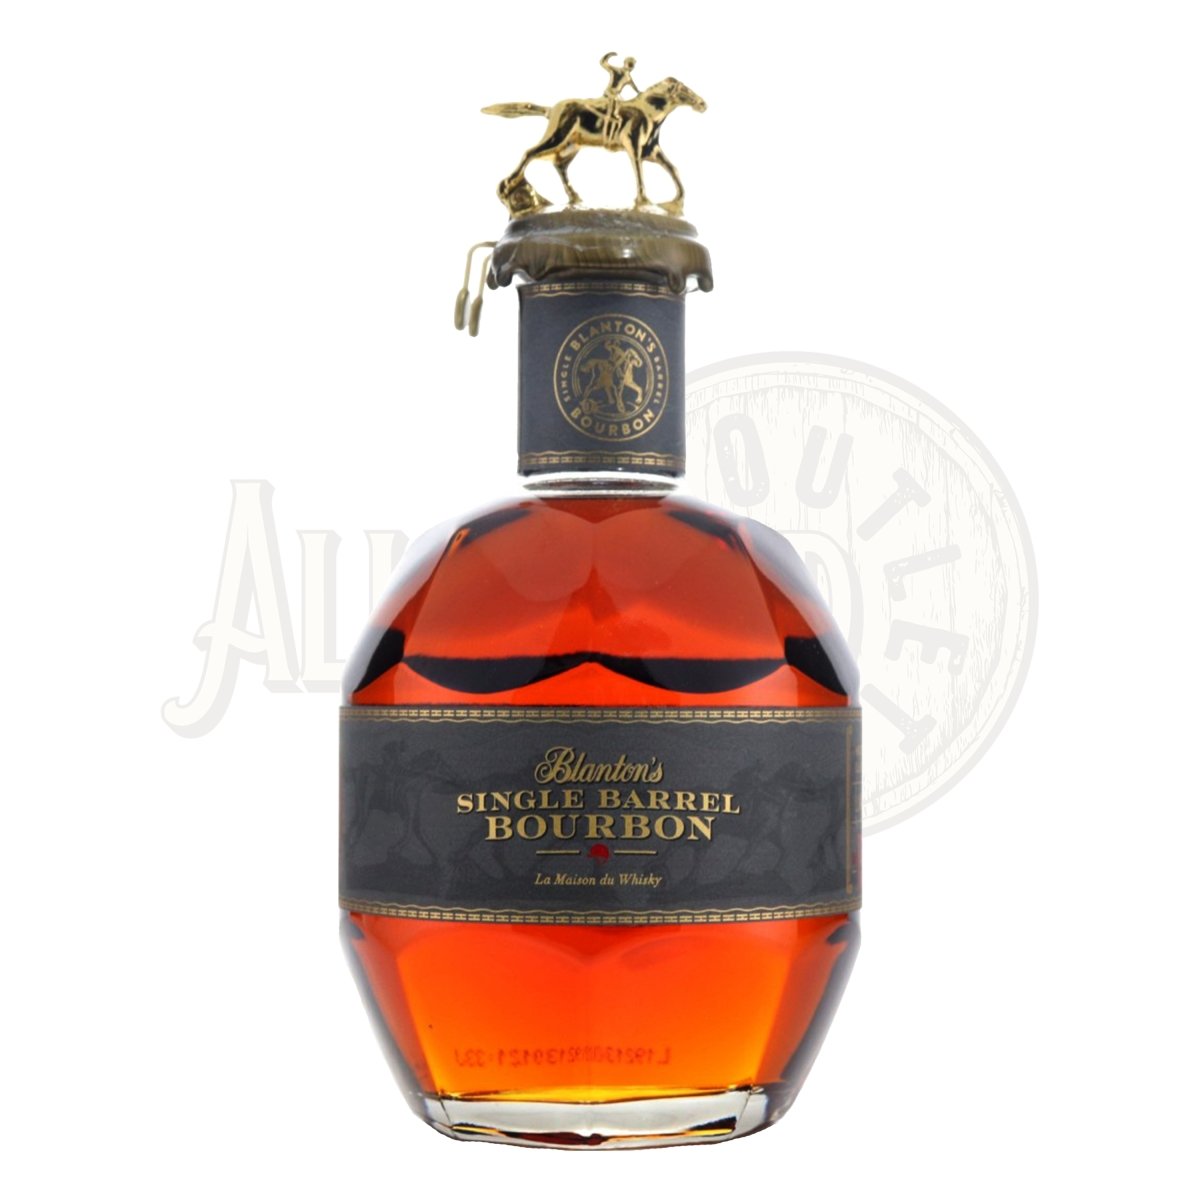 Du Whisky 2019 Limited Edition Bourbon